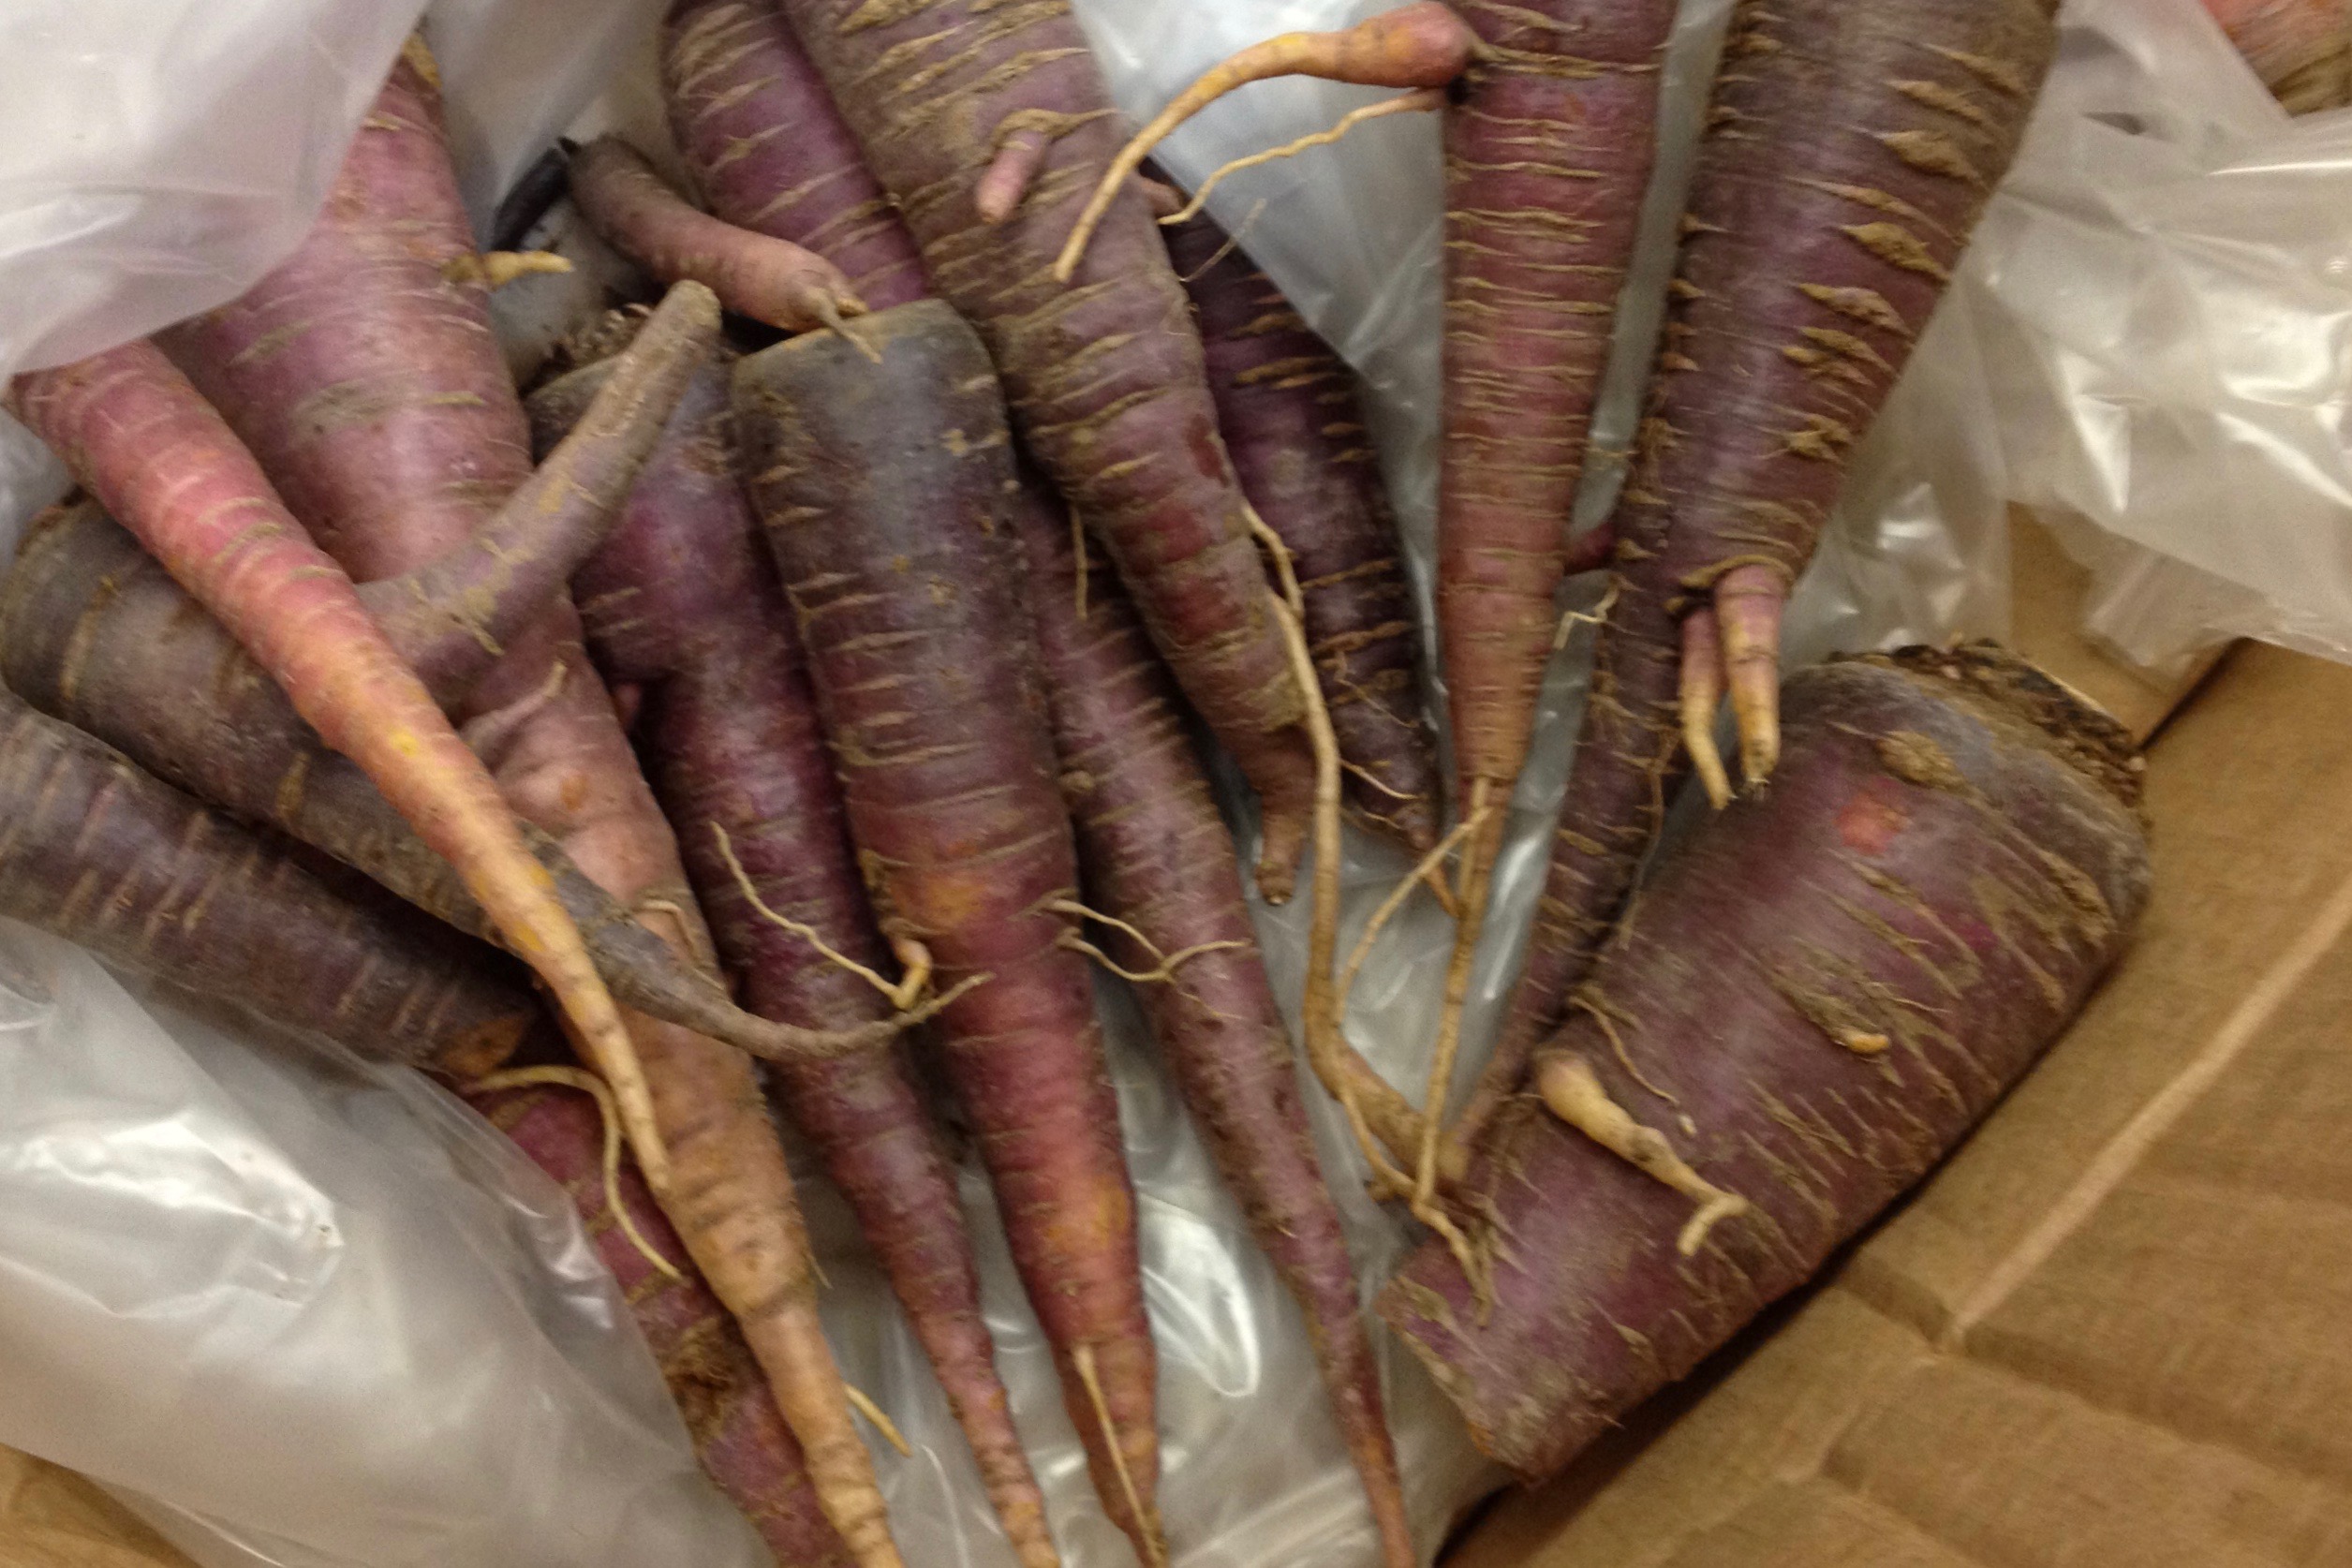 Purple carrot